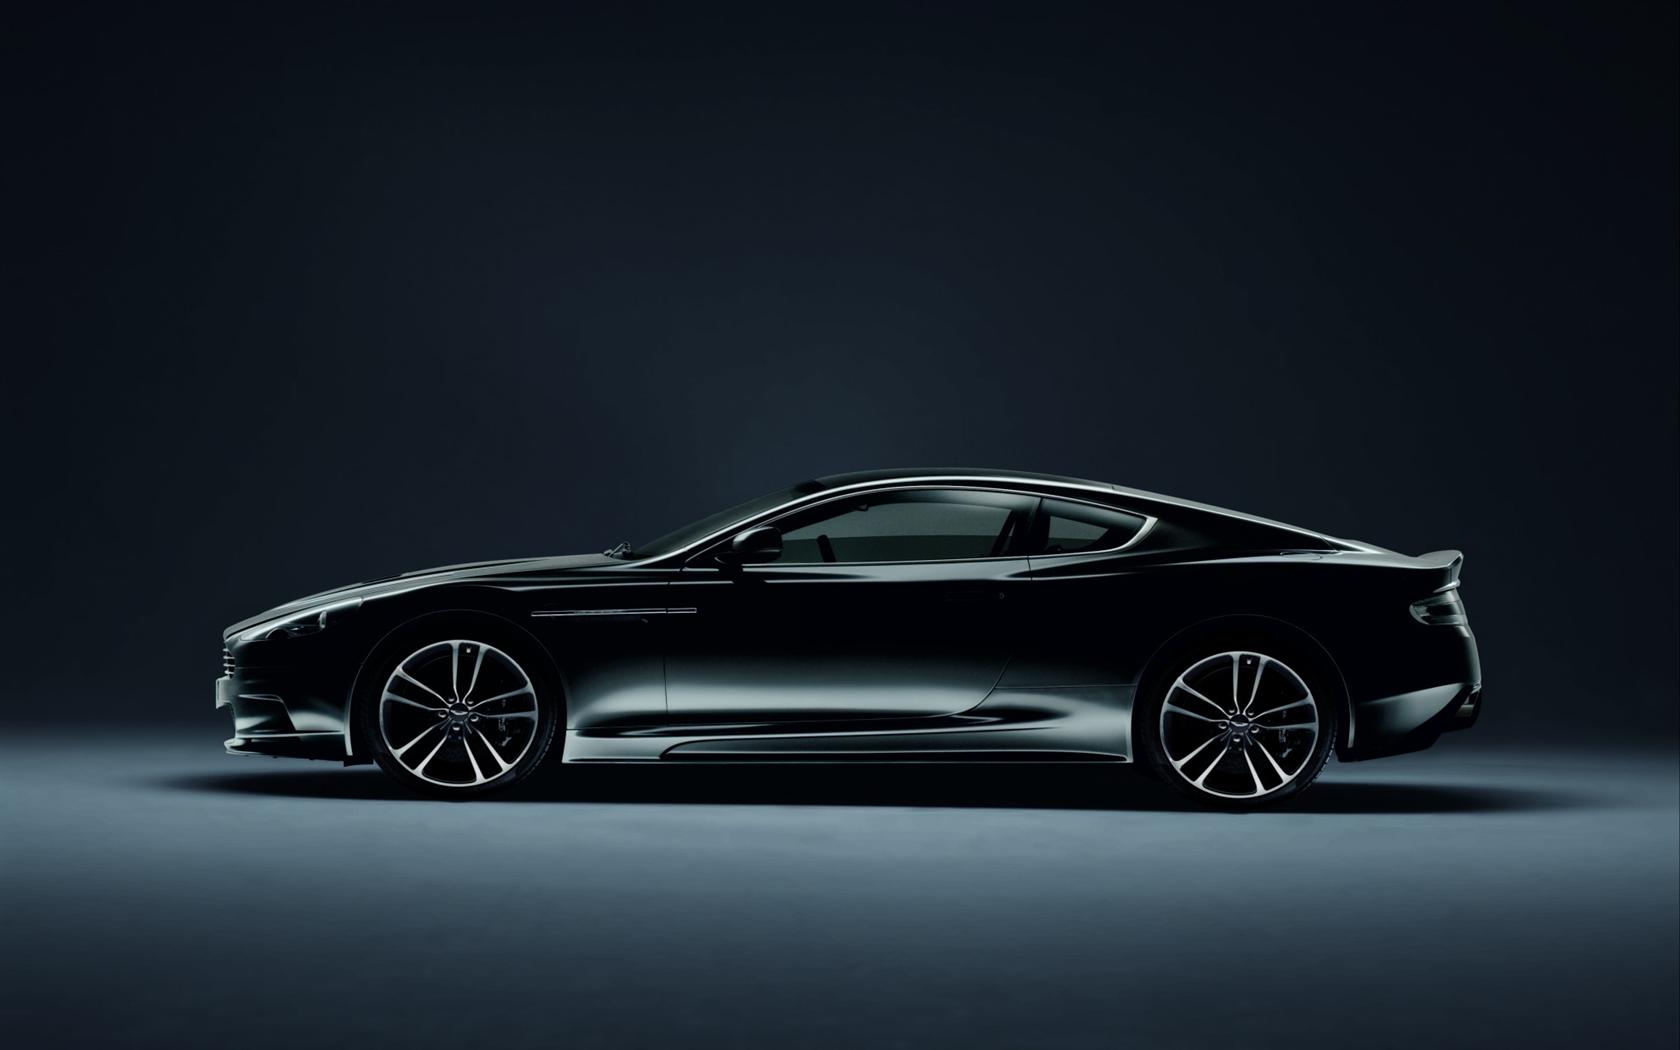 2010 Aston Martin DBS Carbon Black Special Edition